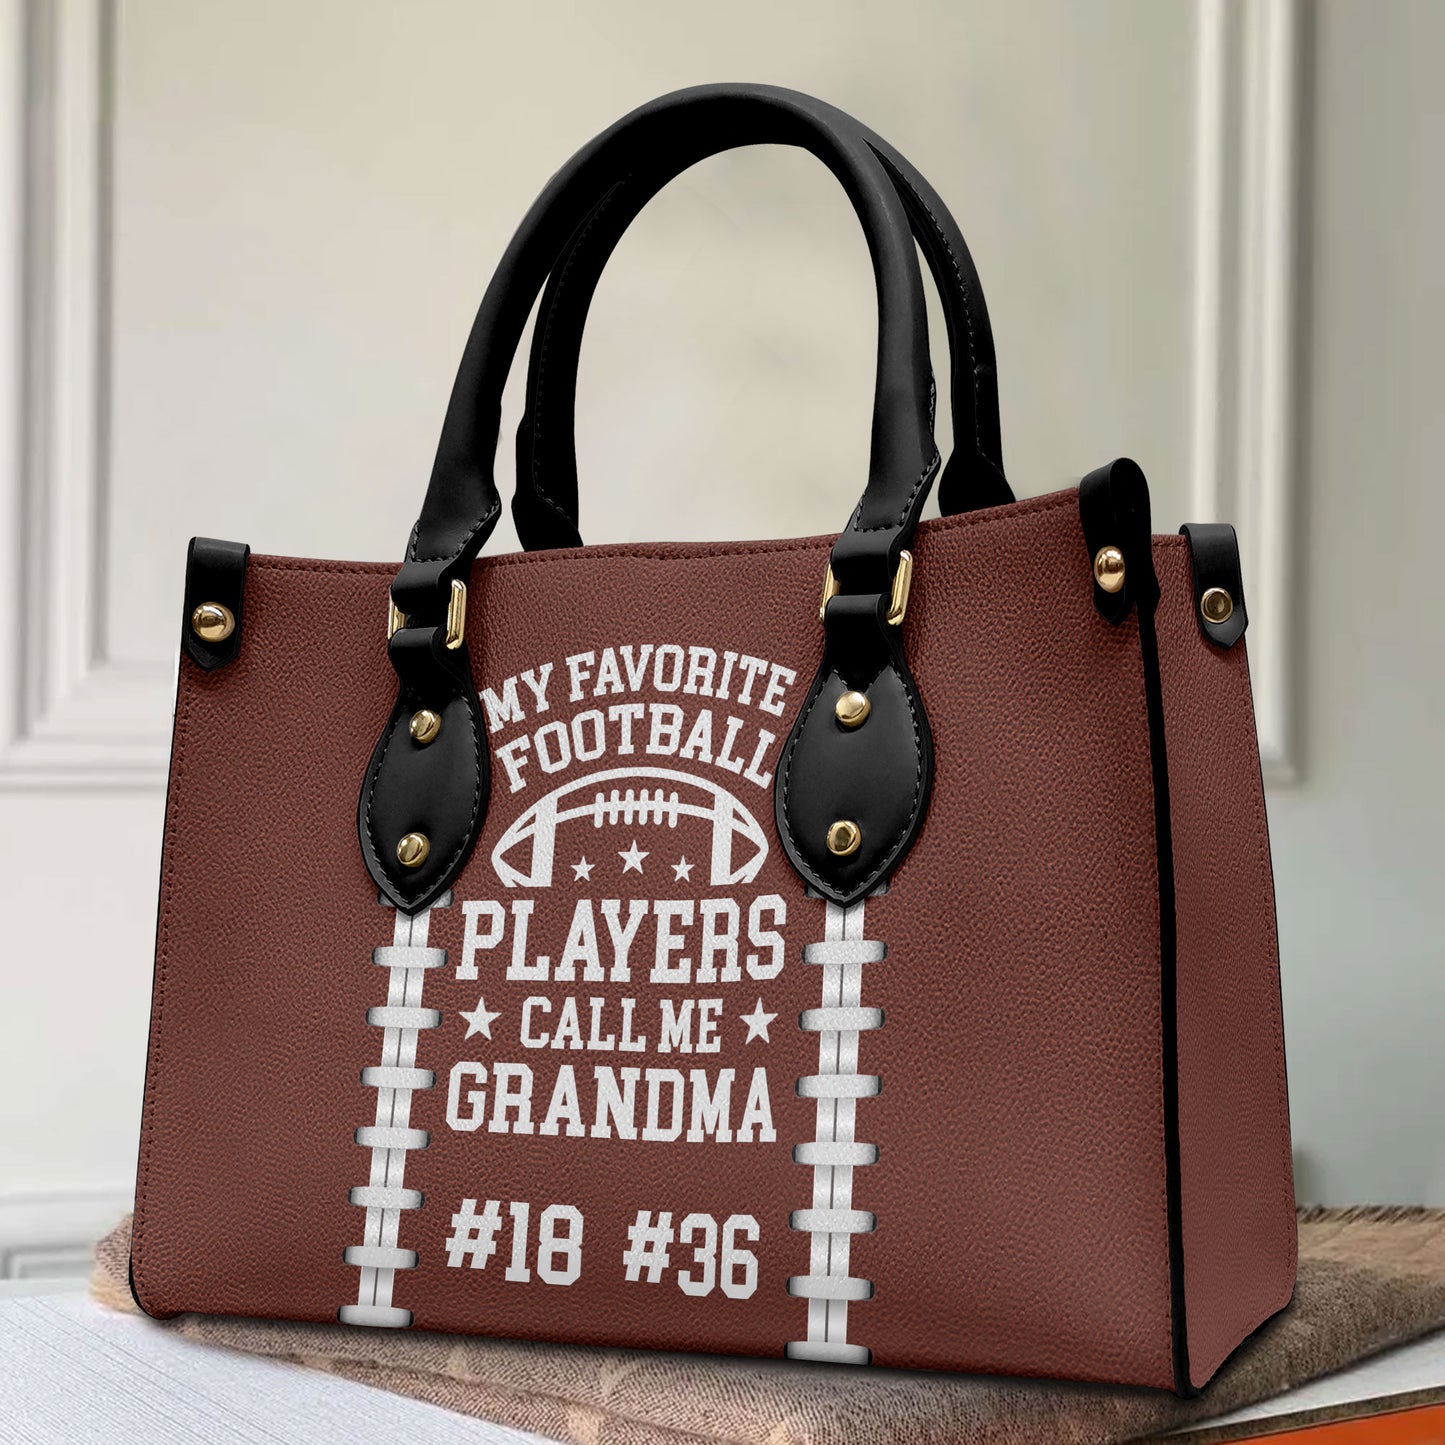 My Favorite Football Player Calls Me Grandma - Personalized Leather Bag